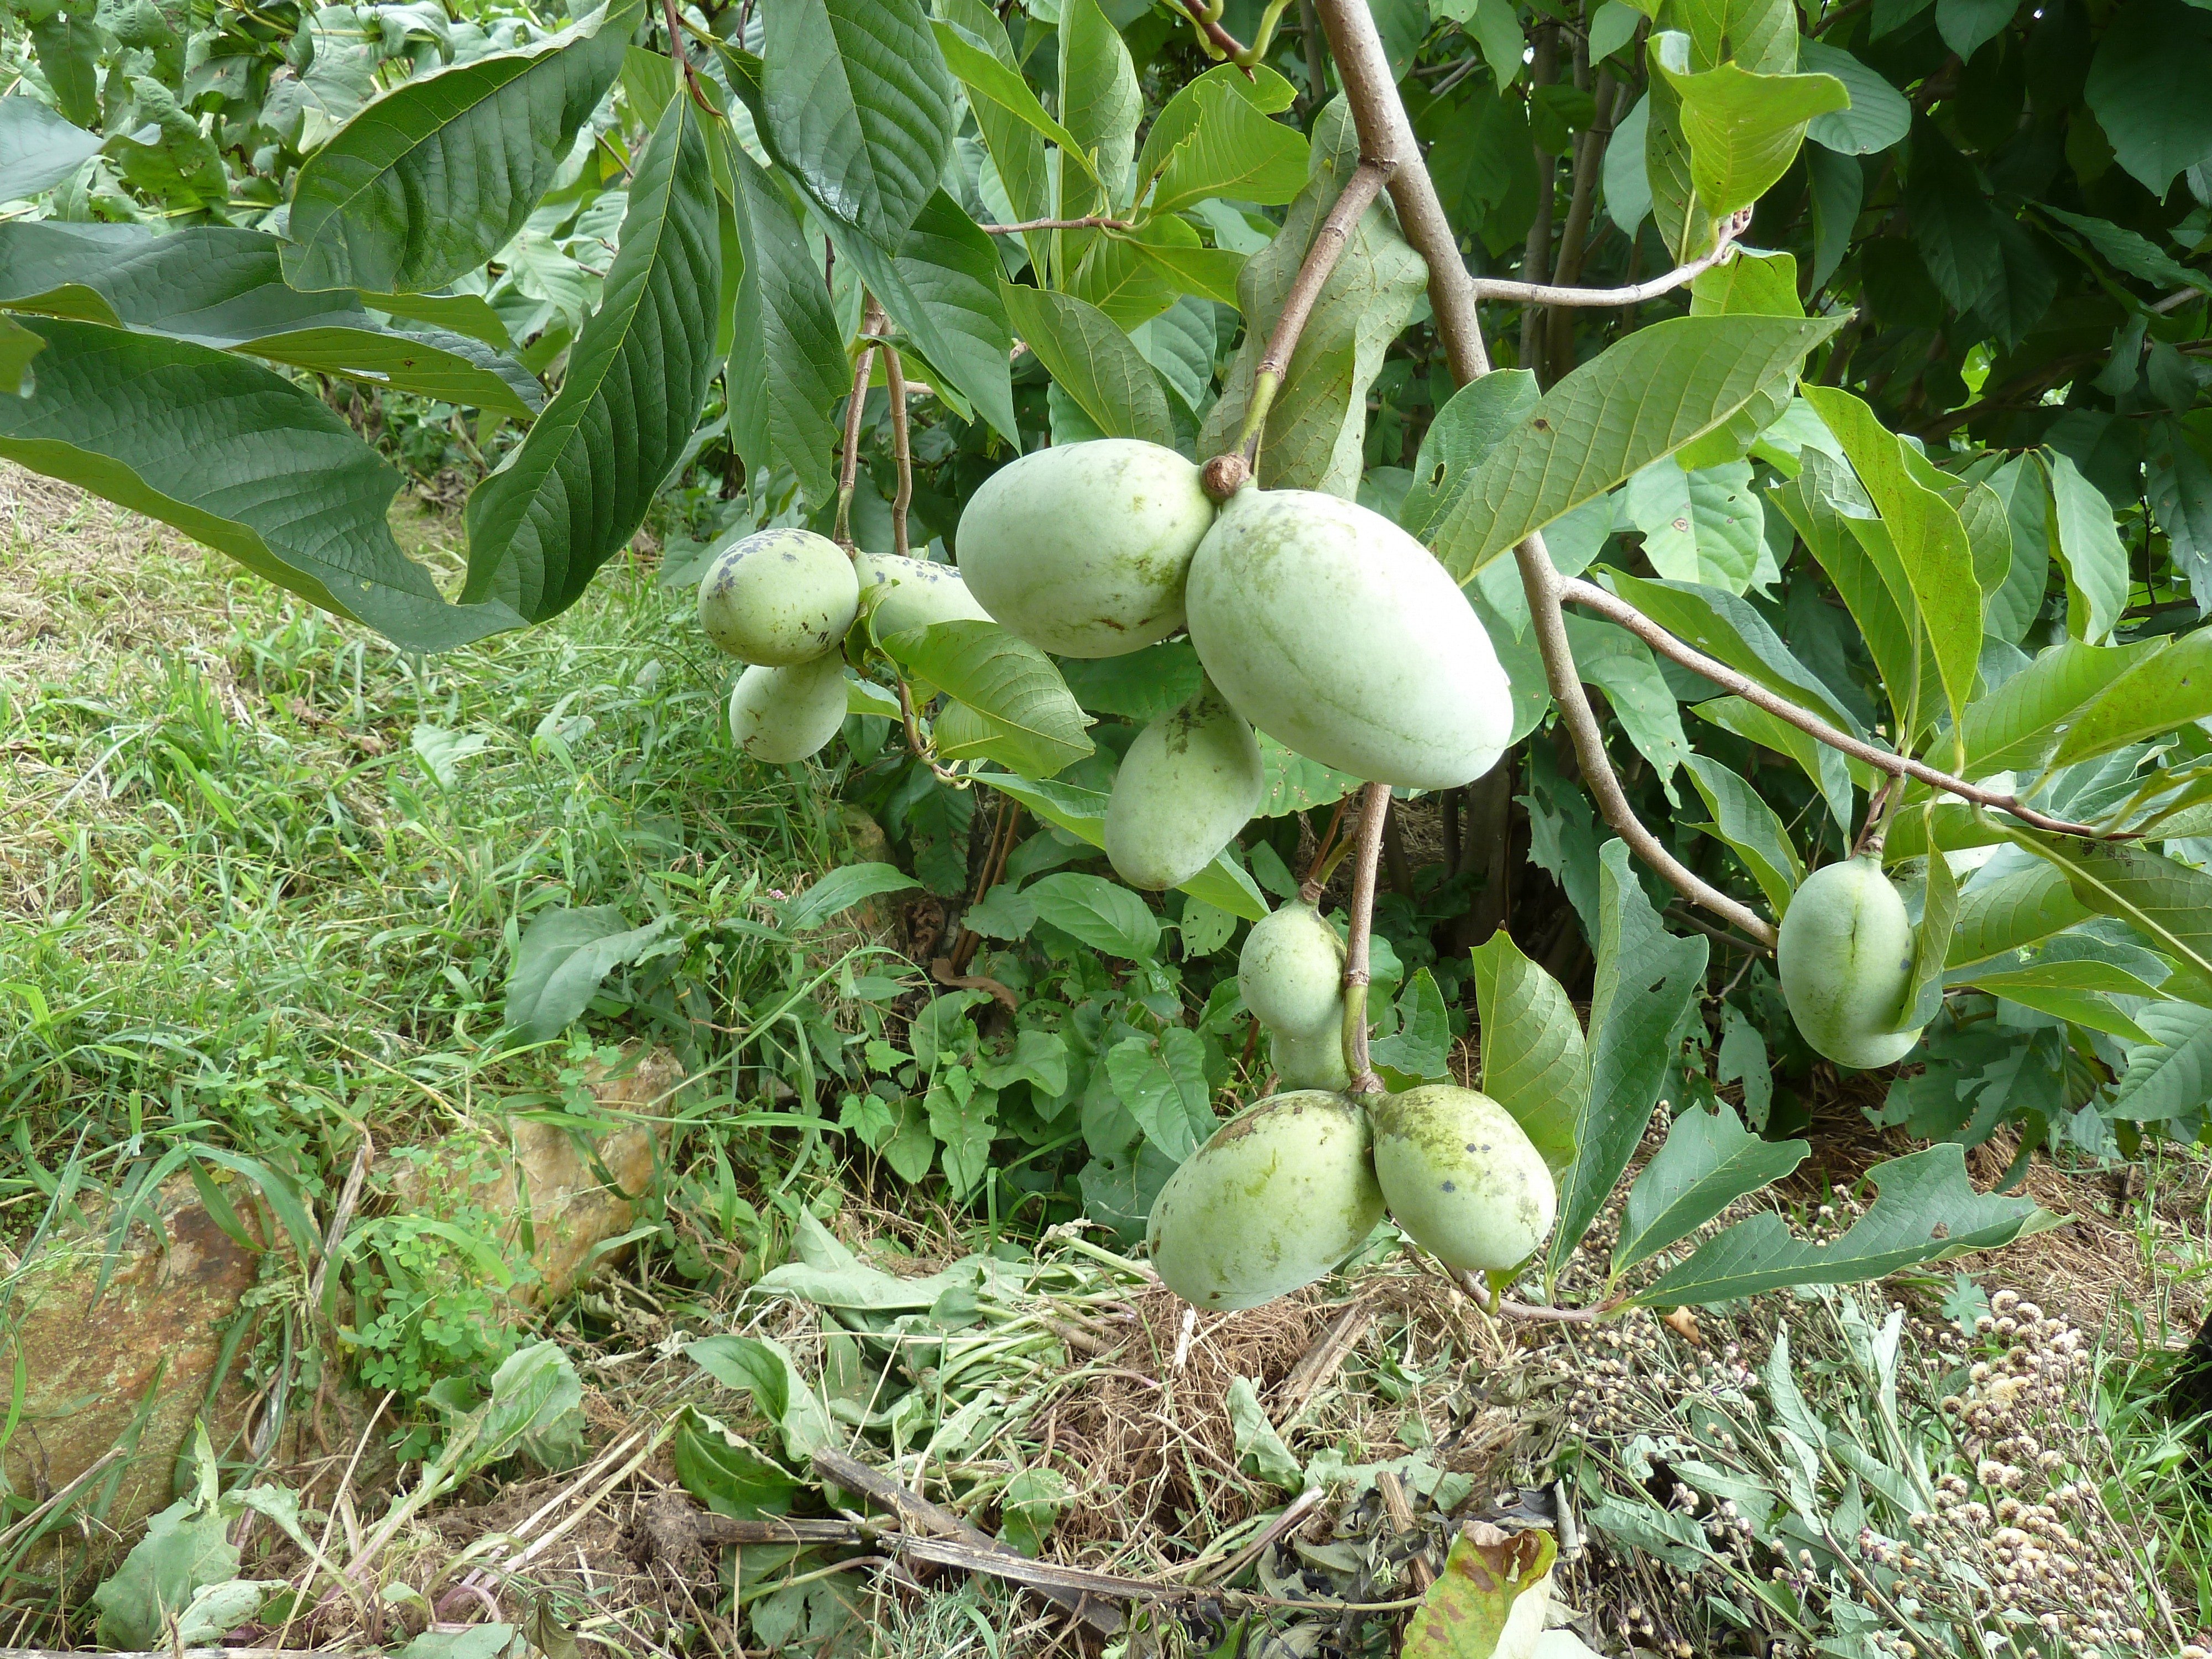 Pawpaw tree and fruits